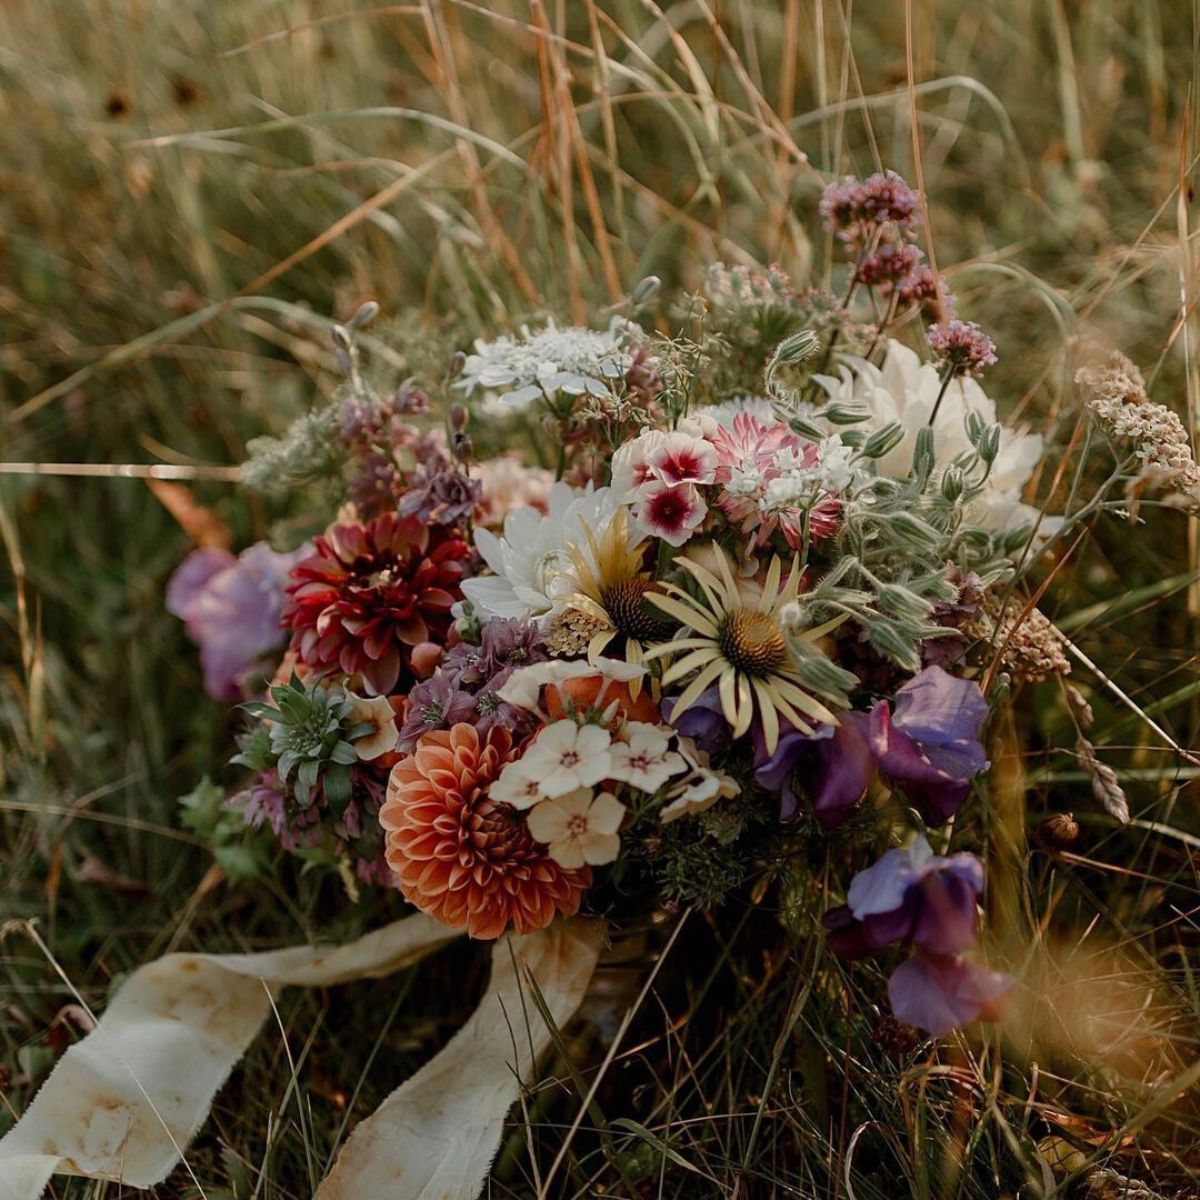 Prairie Girl Flowers make sustainable flower bouquets